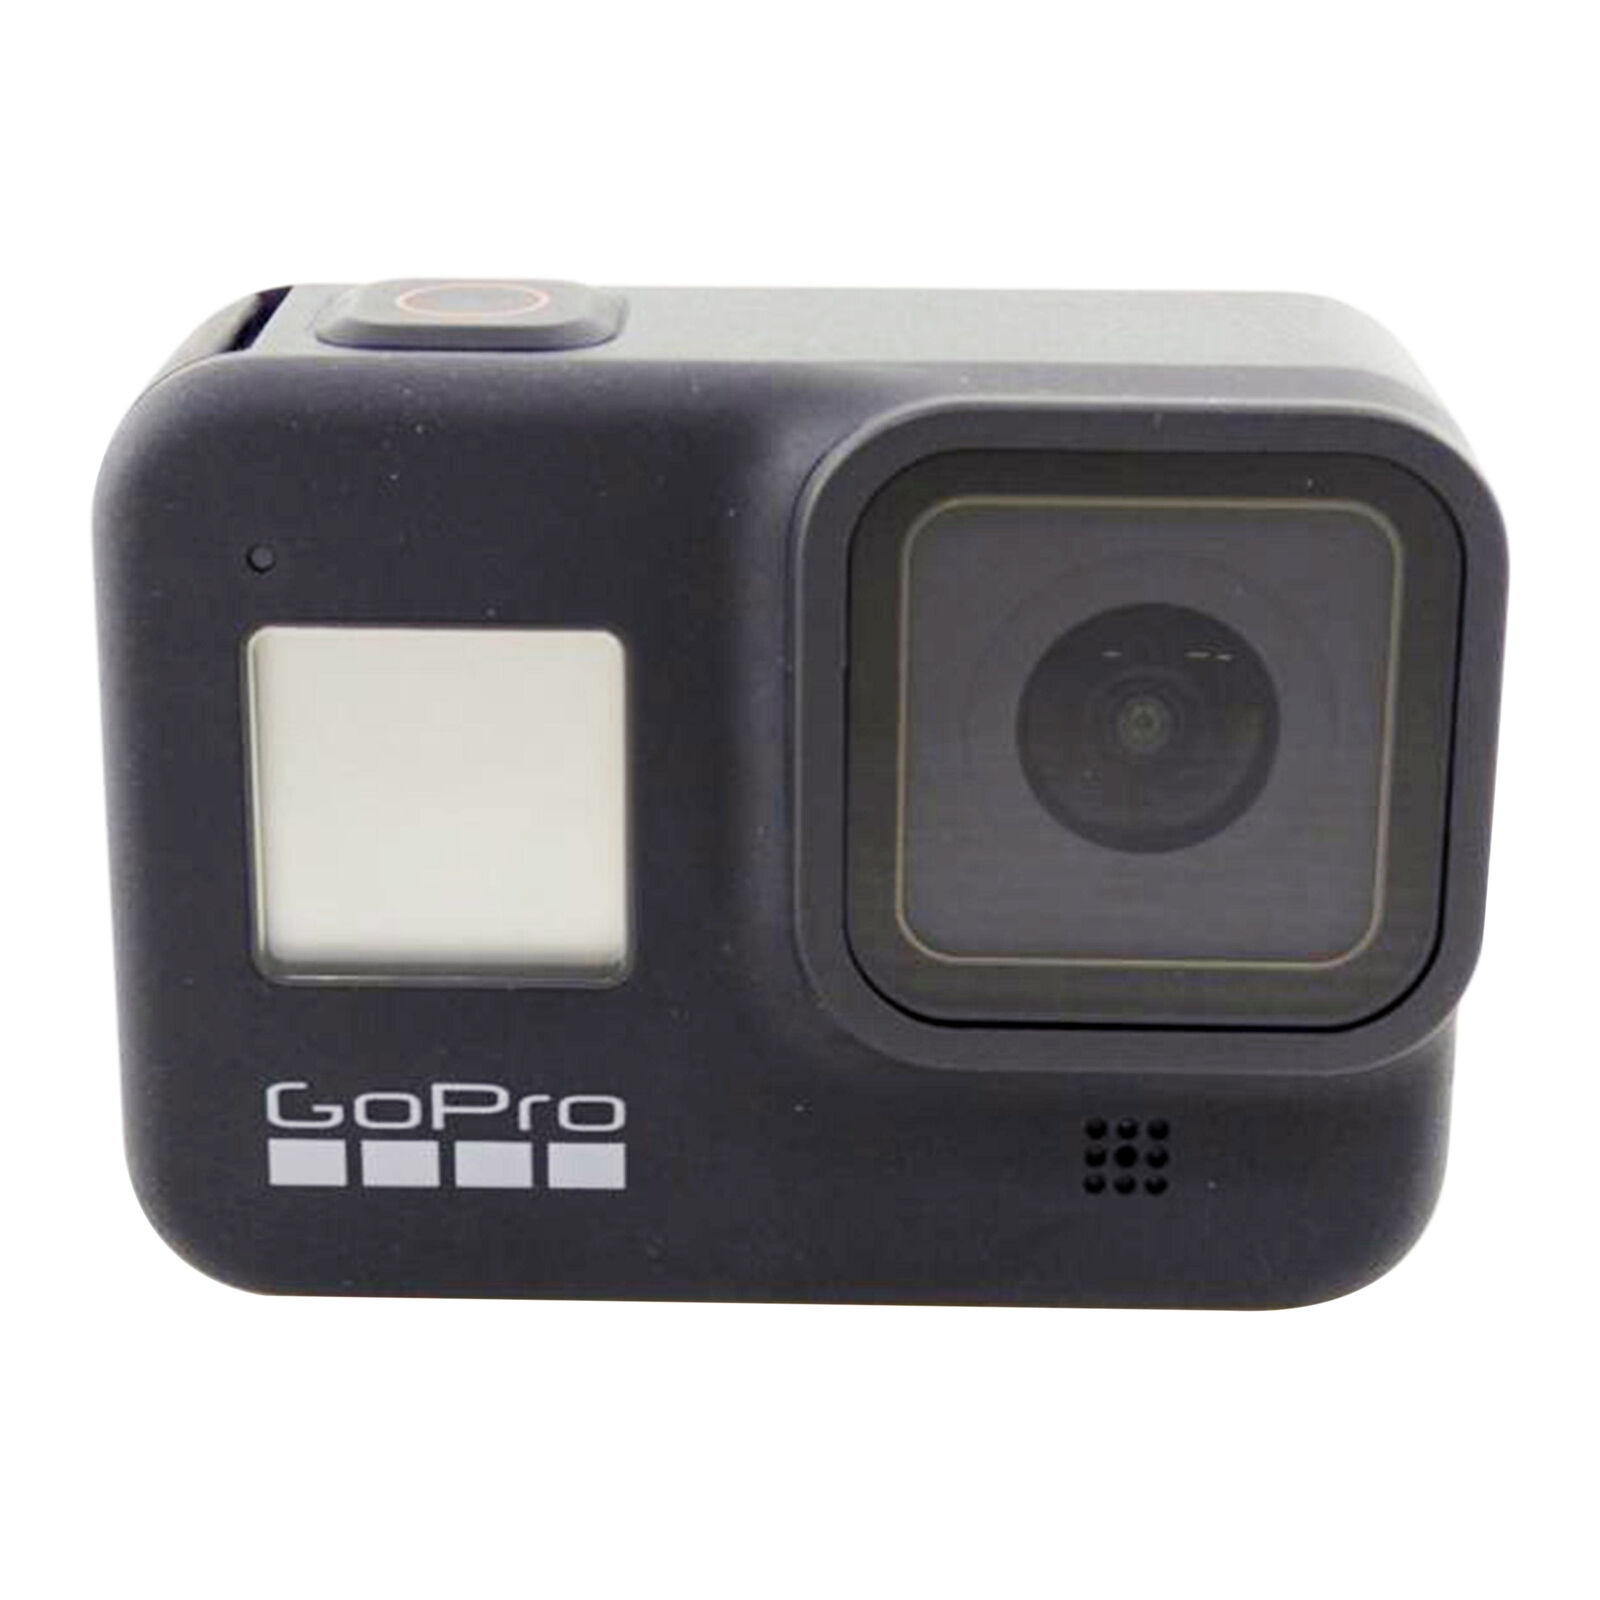 Gopro Gopro/Action Camera/Chdhx-802-Fw/Video Camera//64 0616